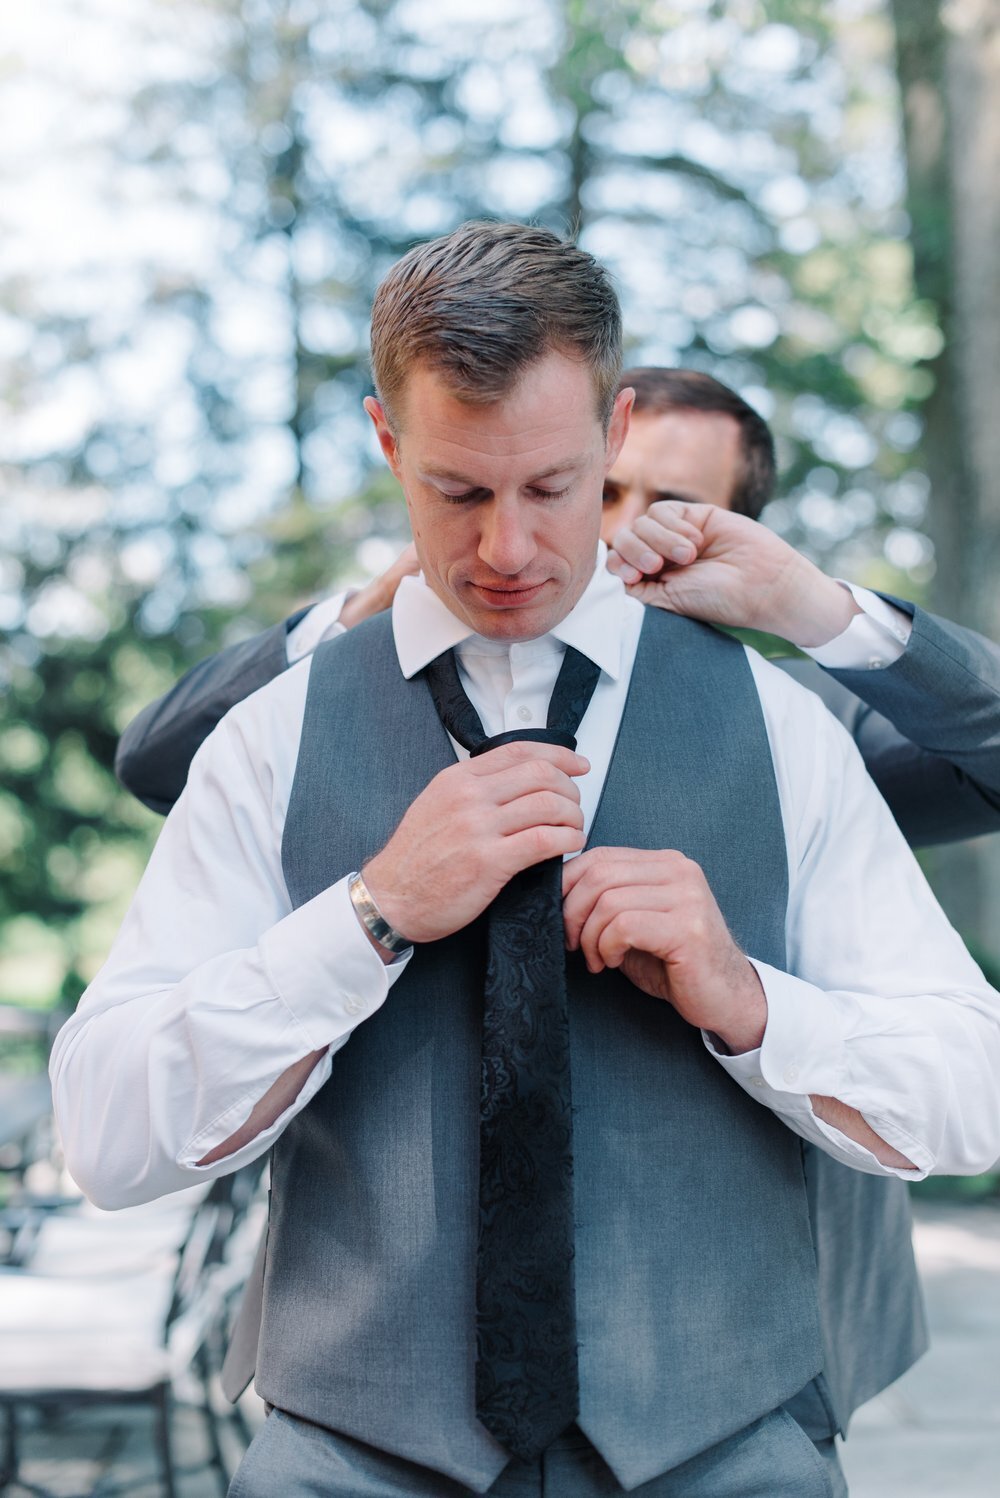 Groomsman helps groom get ready for wedding